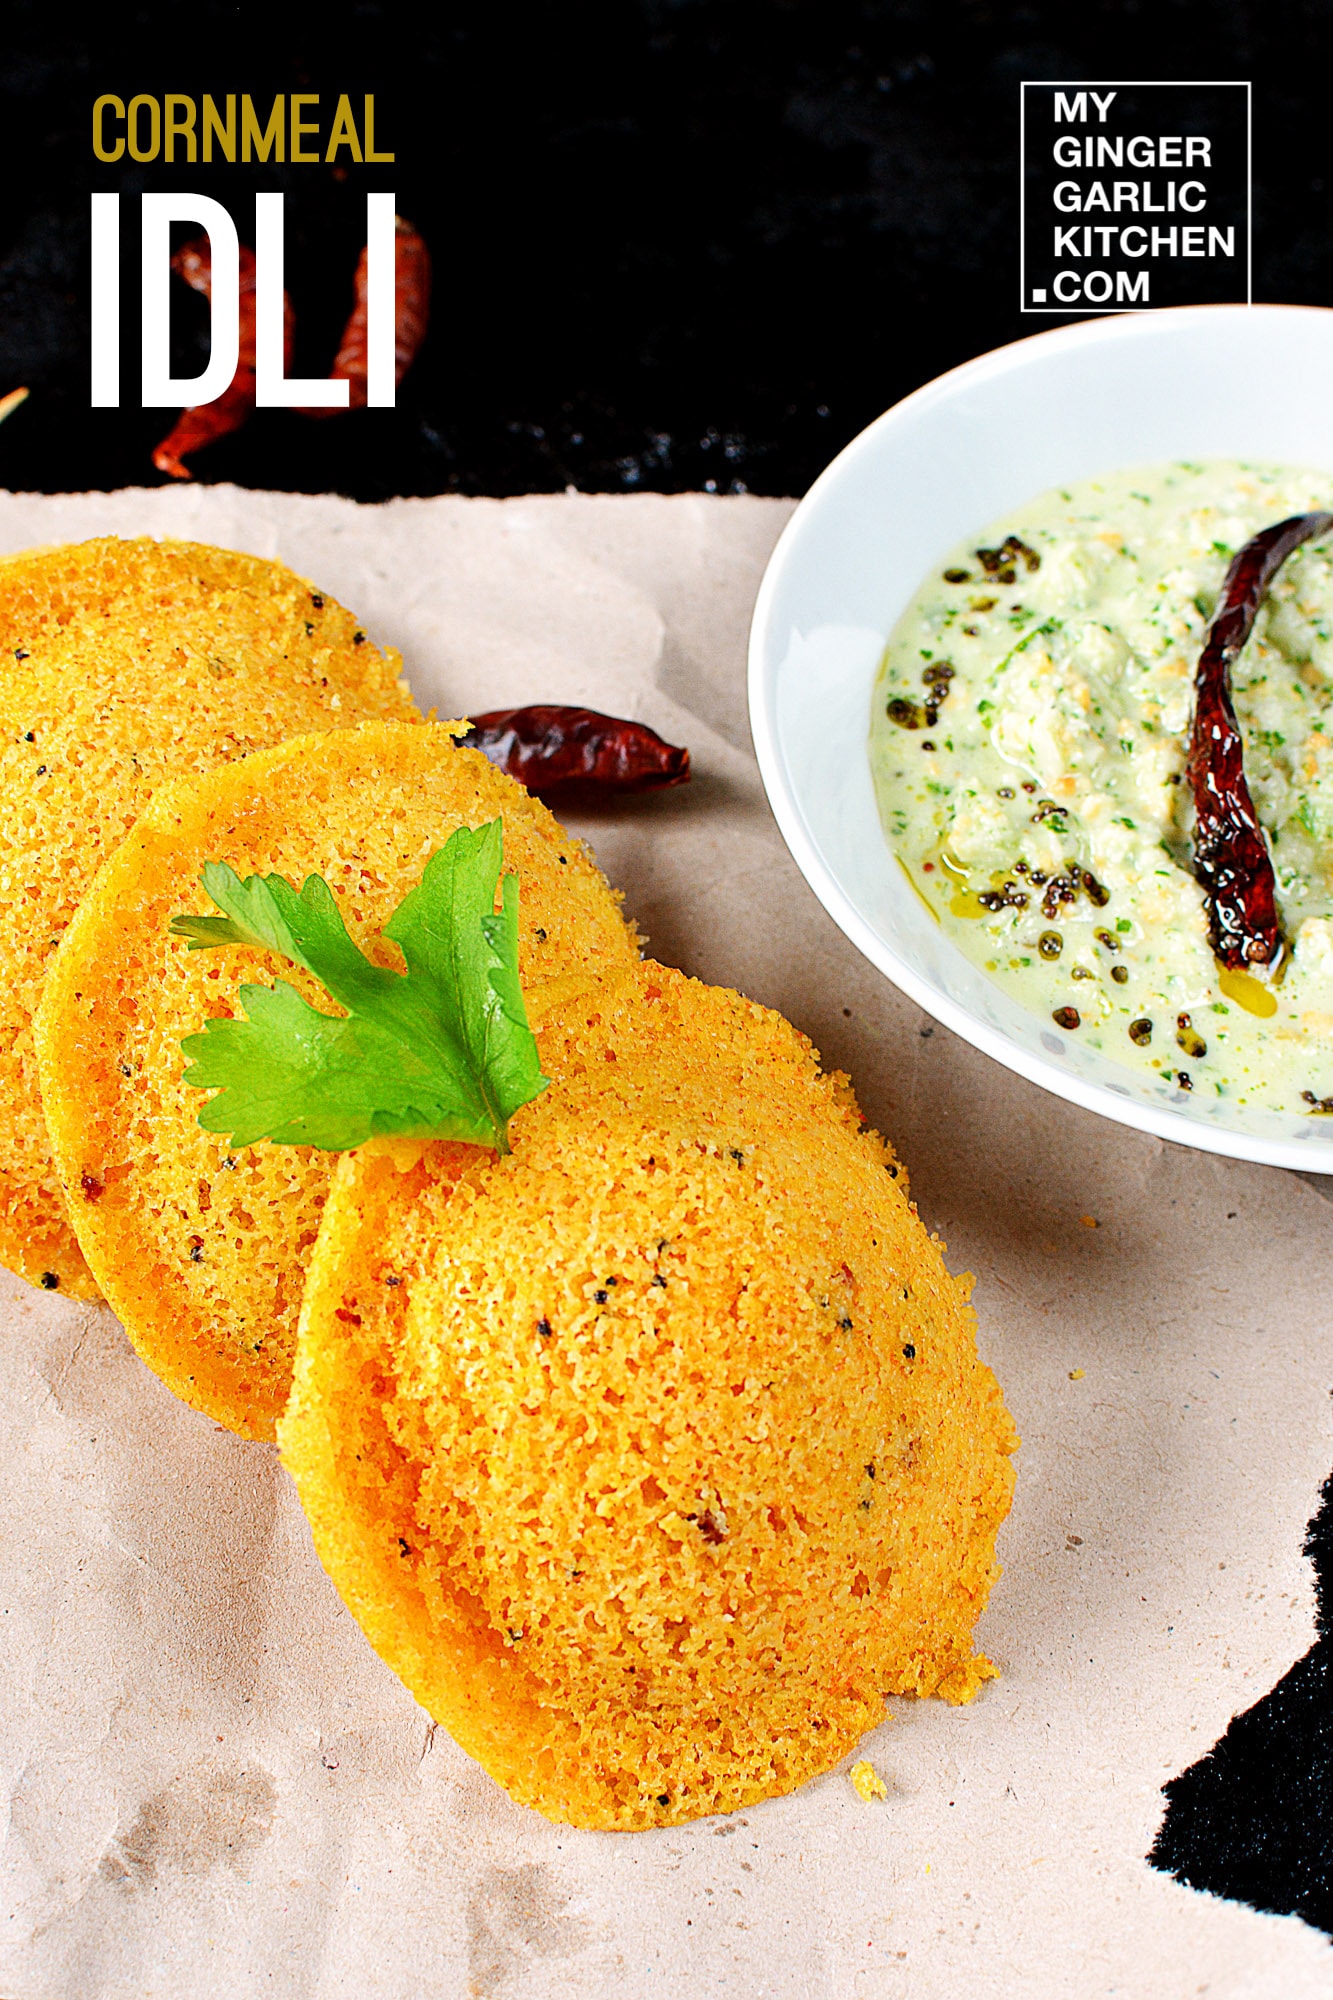 Image - recipe cornmeal idli anupama paliwal my ginger garlic kitchen 6